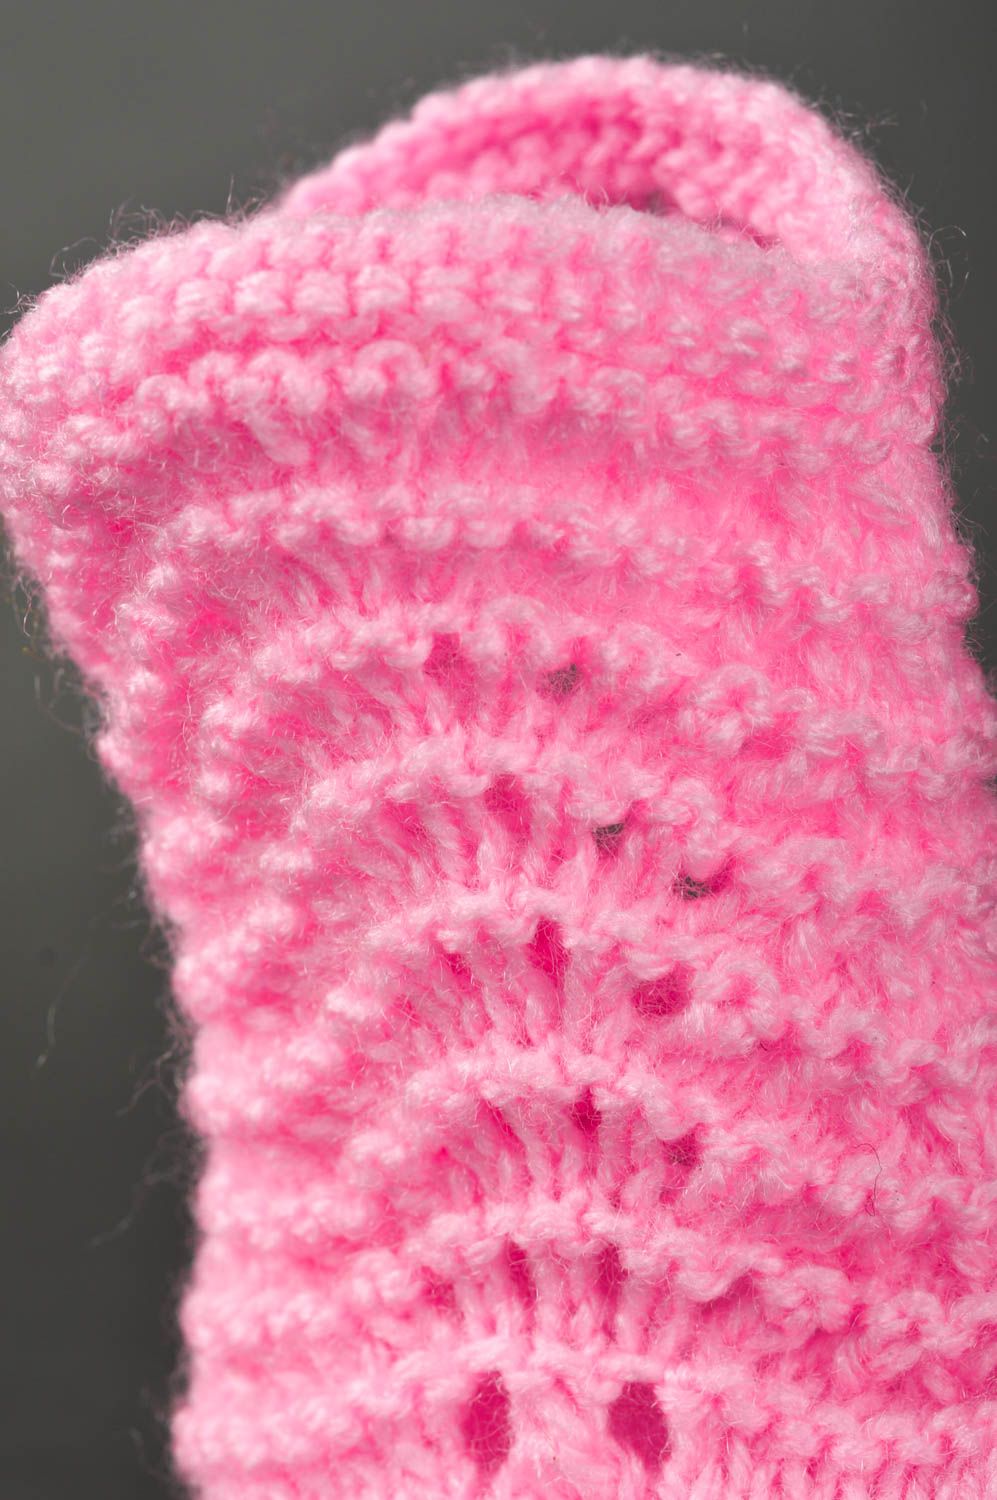 Beautiful handmade crochet baby booties fashion accessories for kids gift ideas photo 5